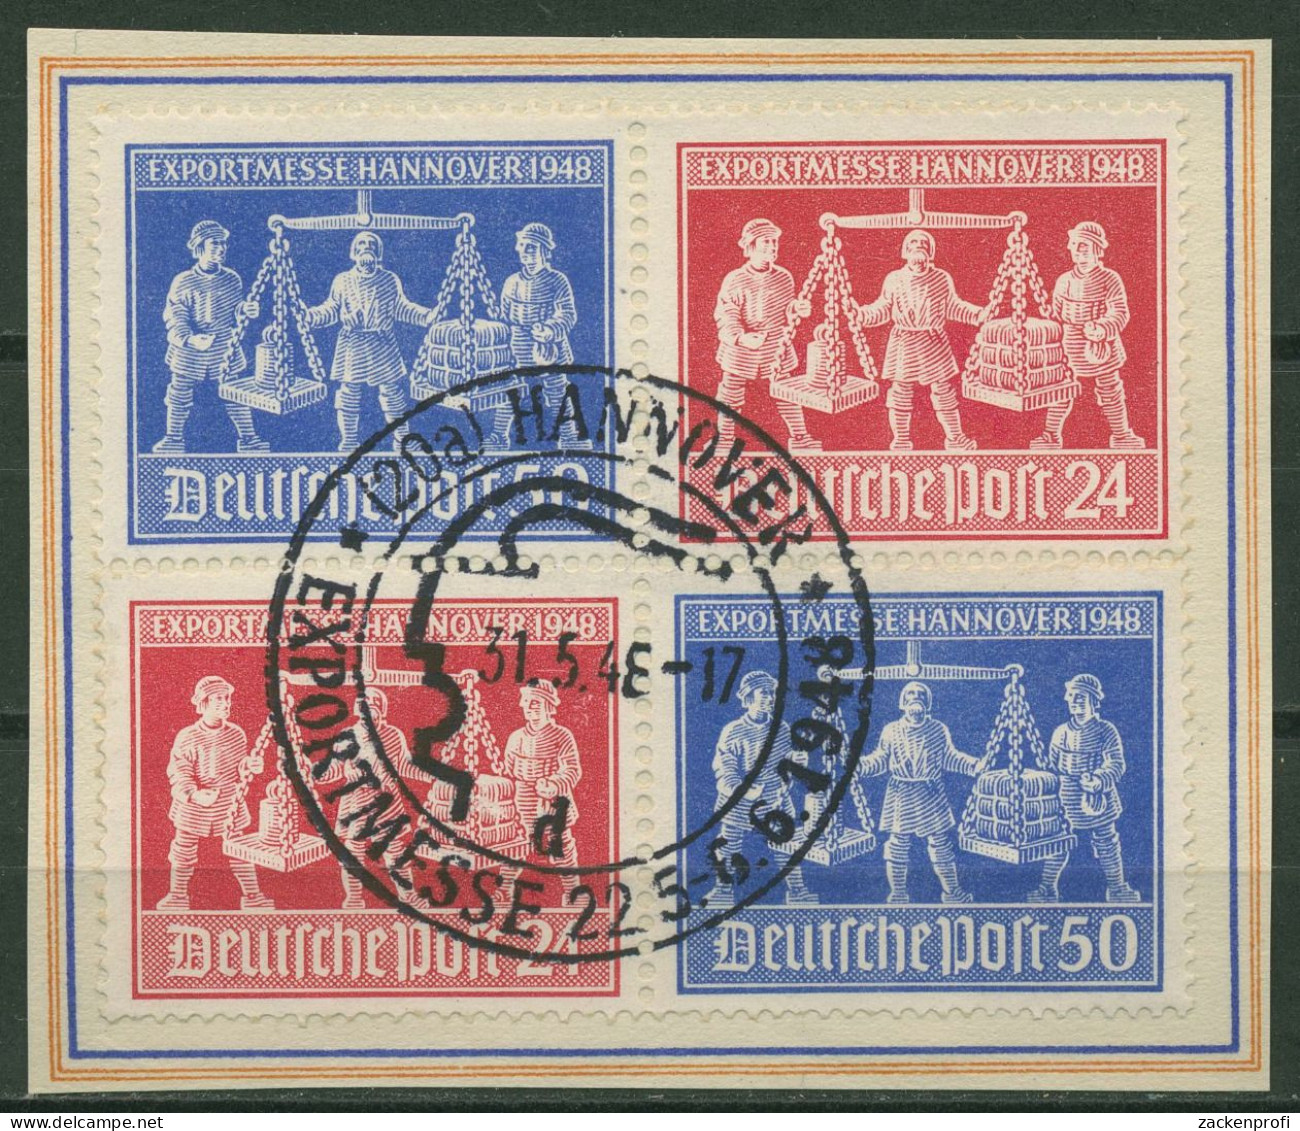 All. Besetzung 1948 Exportmesse Hannover Zusammendruck V Zd 1 Briefstück - Used